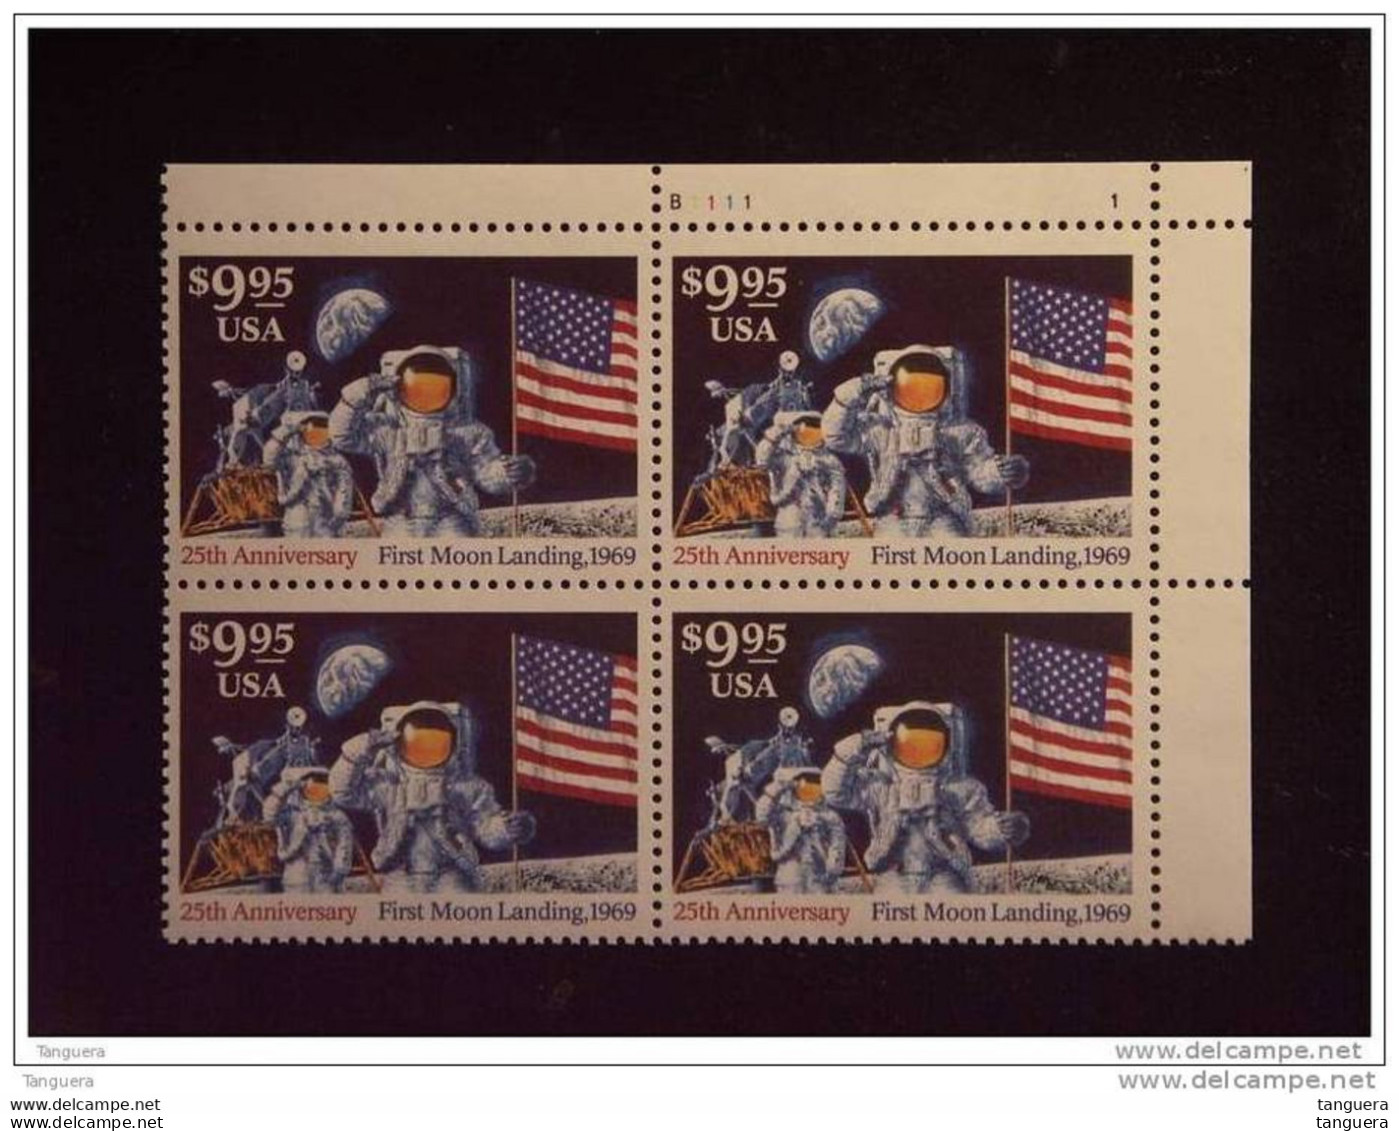 USA Etats-Unis D'Amerique United States 1994 Moon Landing Bloc Of 4 X Yv 2259 MNH ** Plate N° B1111 - Plaatnummers